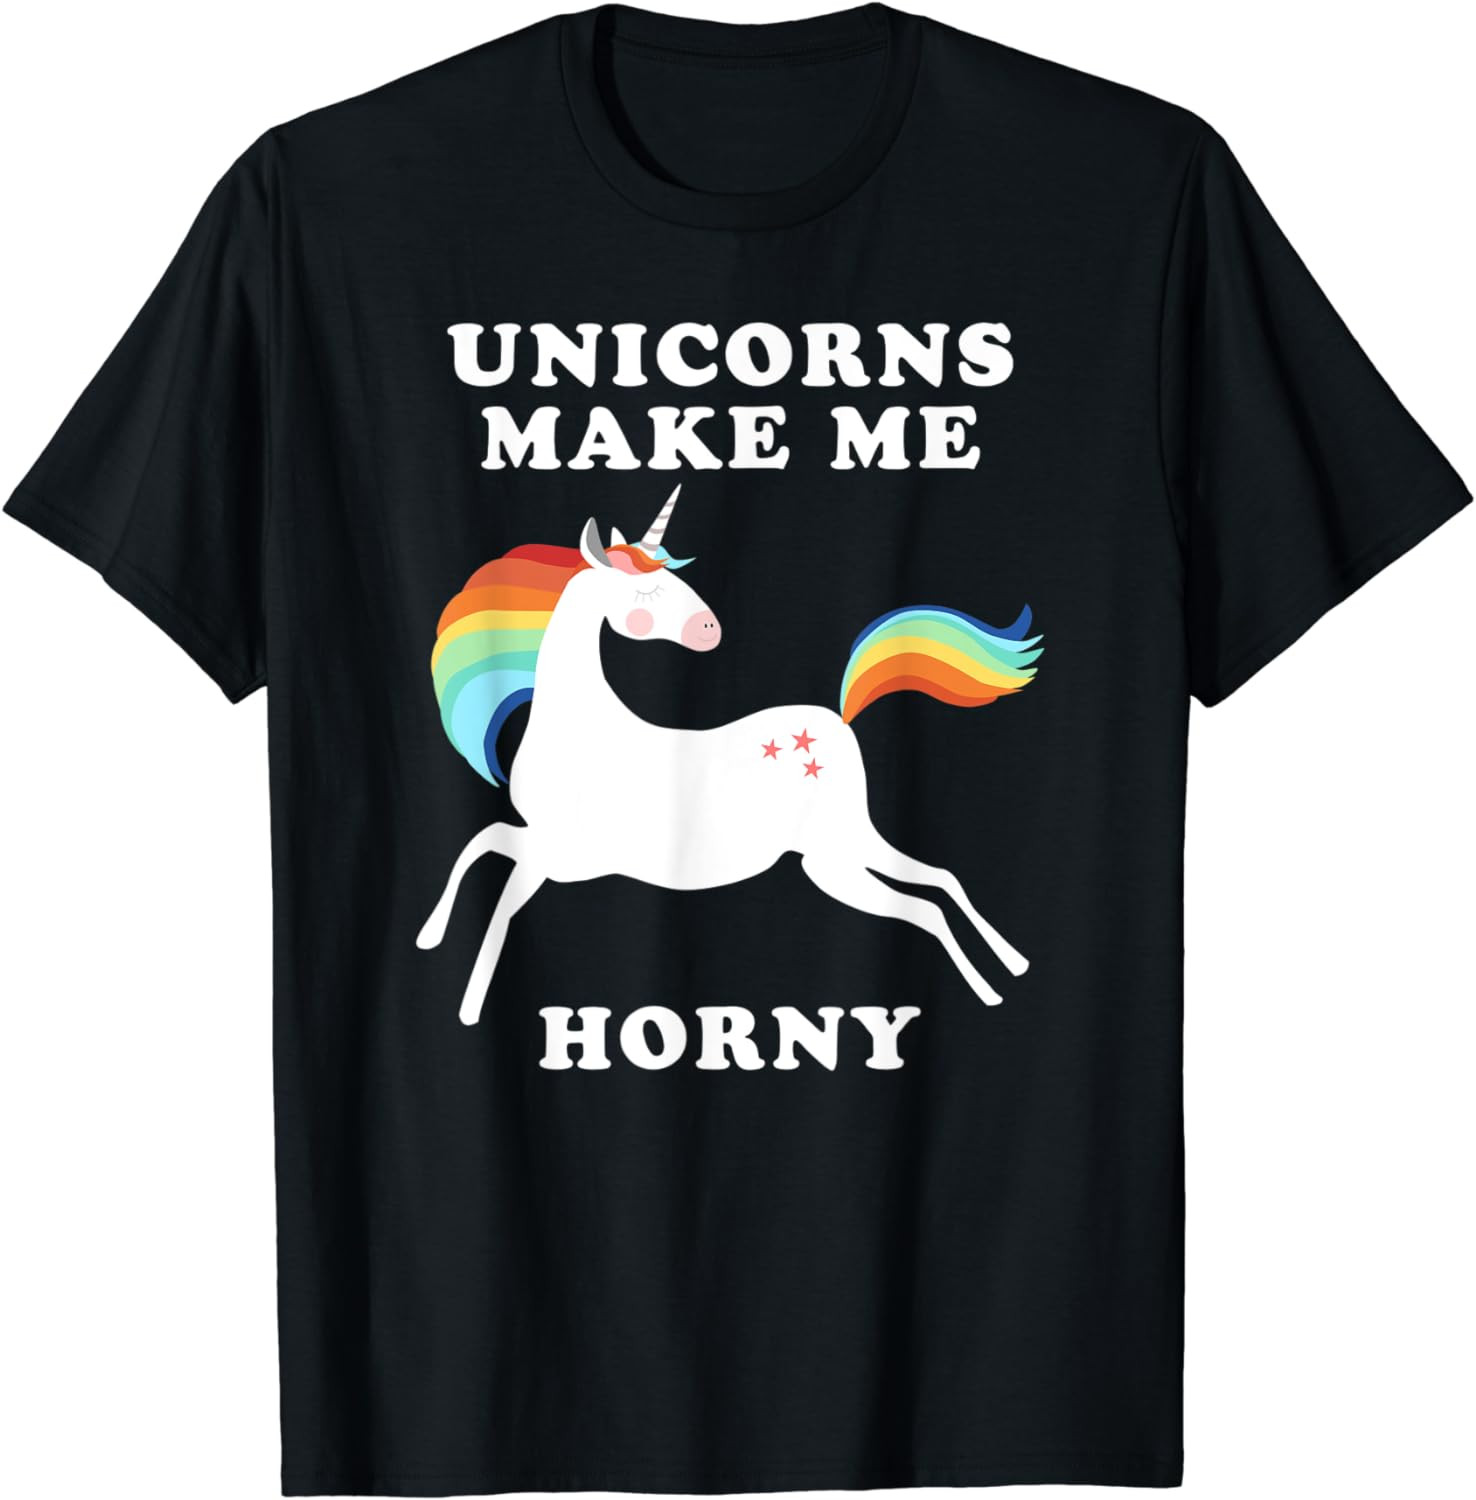 Unicorns Make Me Horny T-Shirt Funny Unicorn Tee